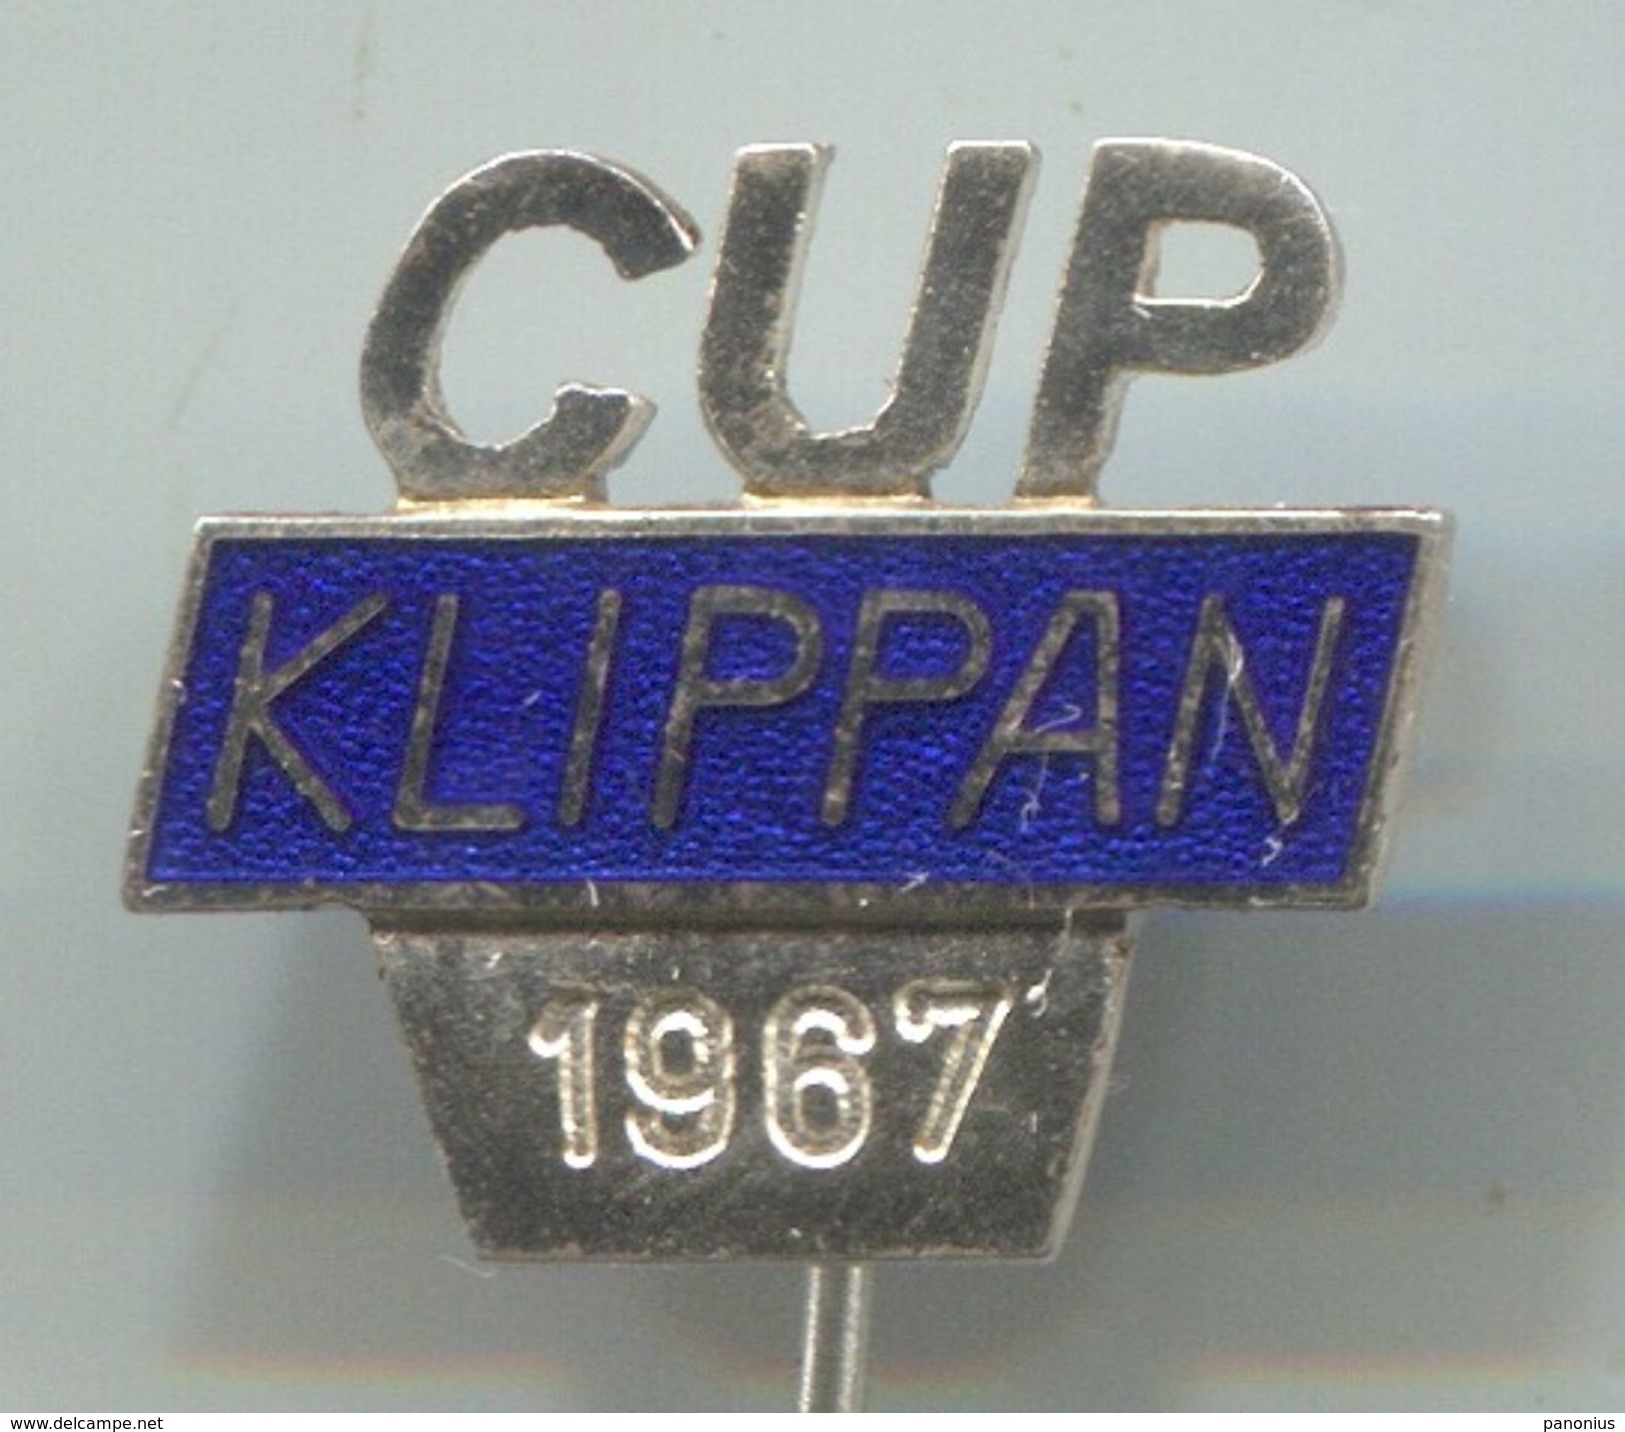 KLIPPAN CUP 1967 - Rally, Formula, Enamel, Vintage Pin, Badge, Abzeichen - Automobile - F1